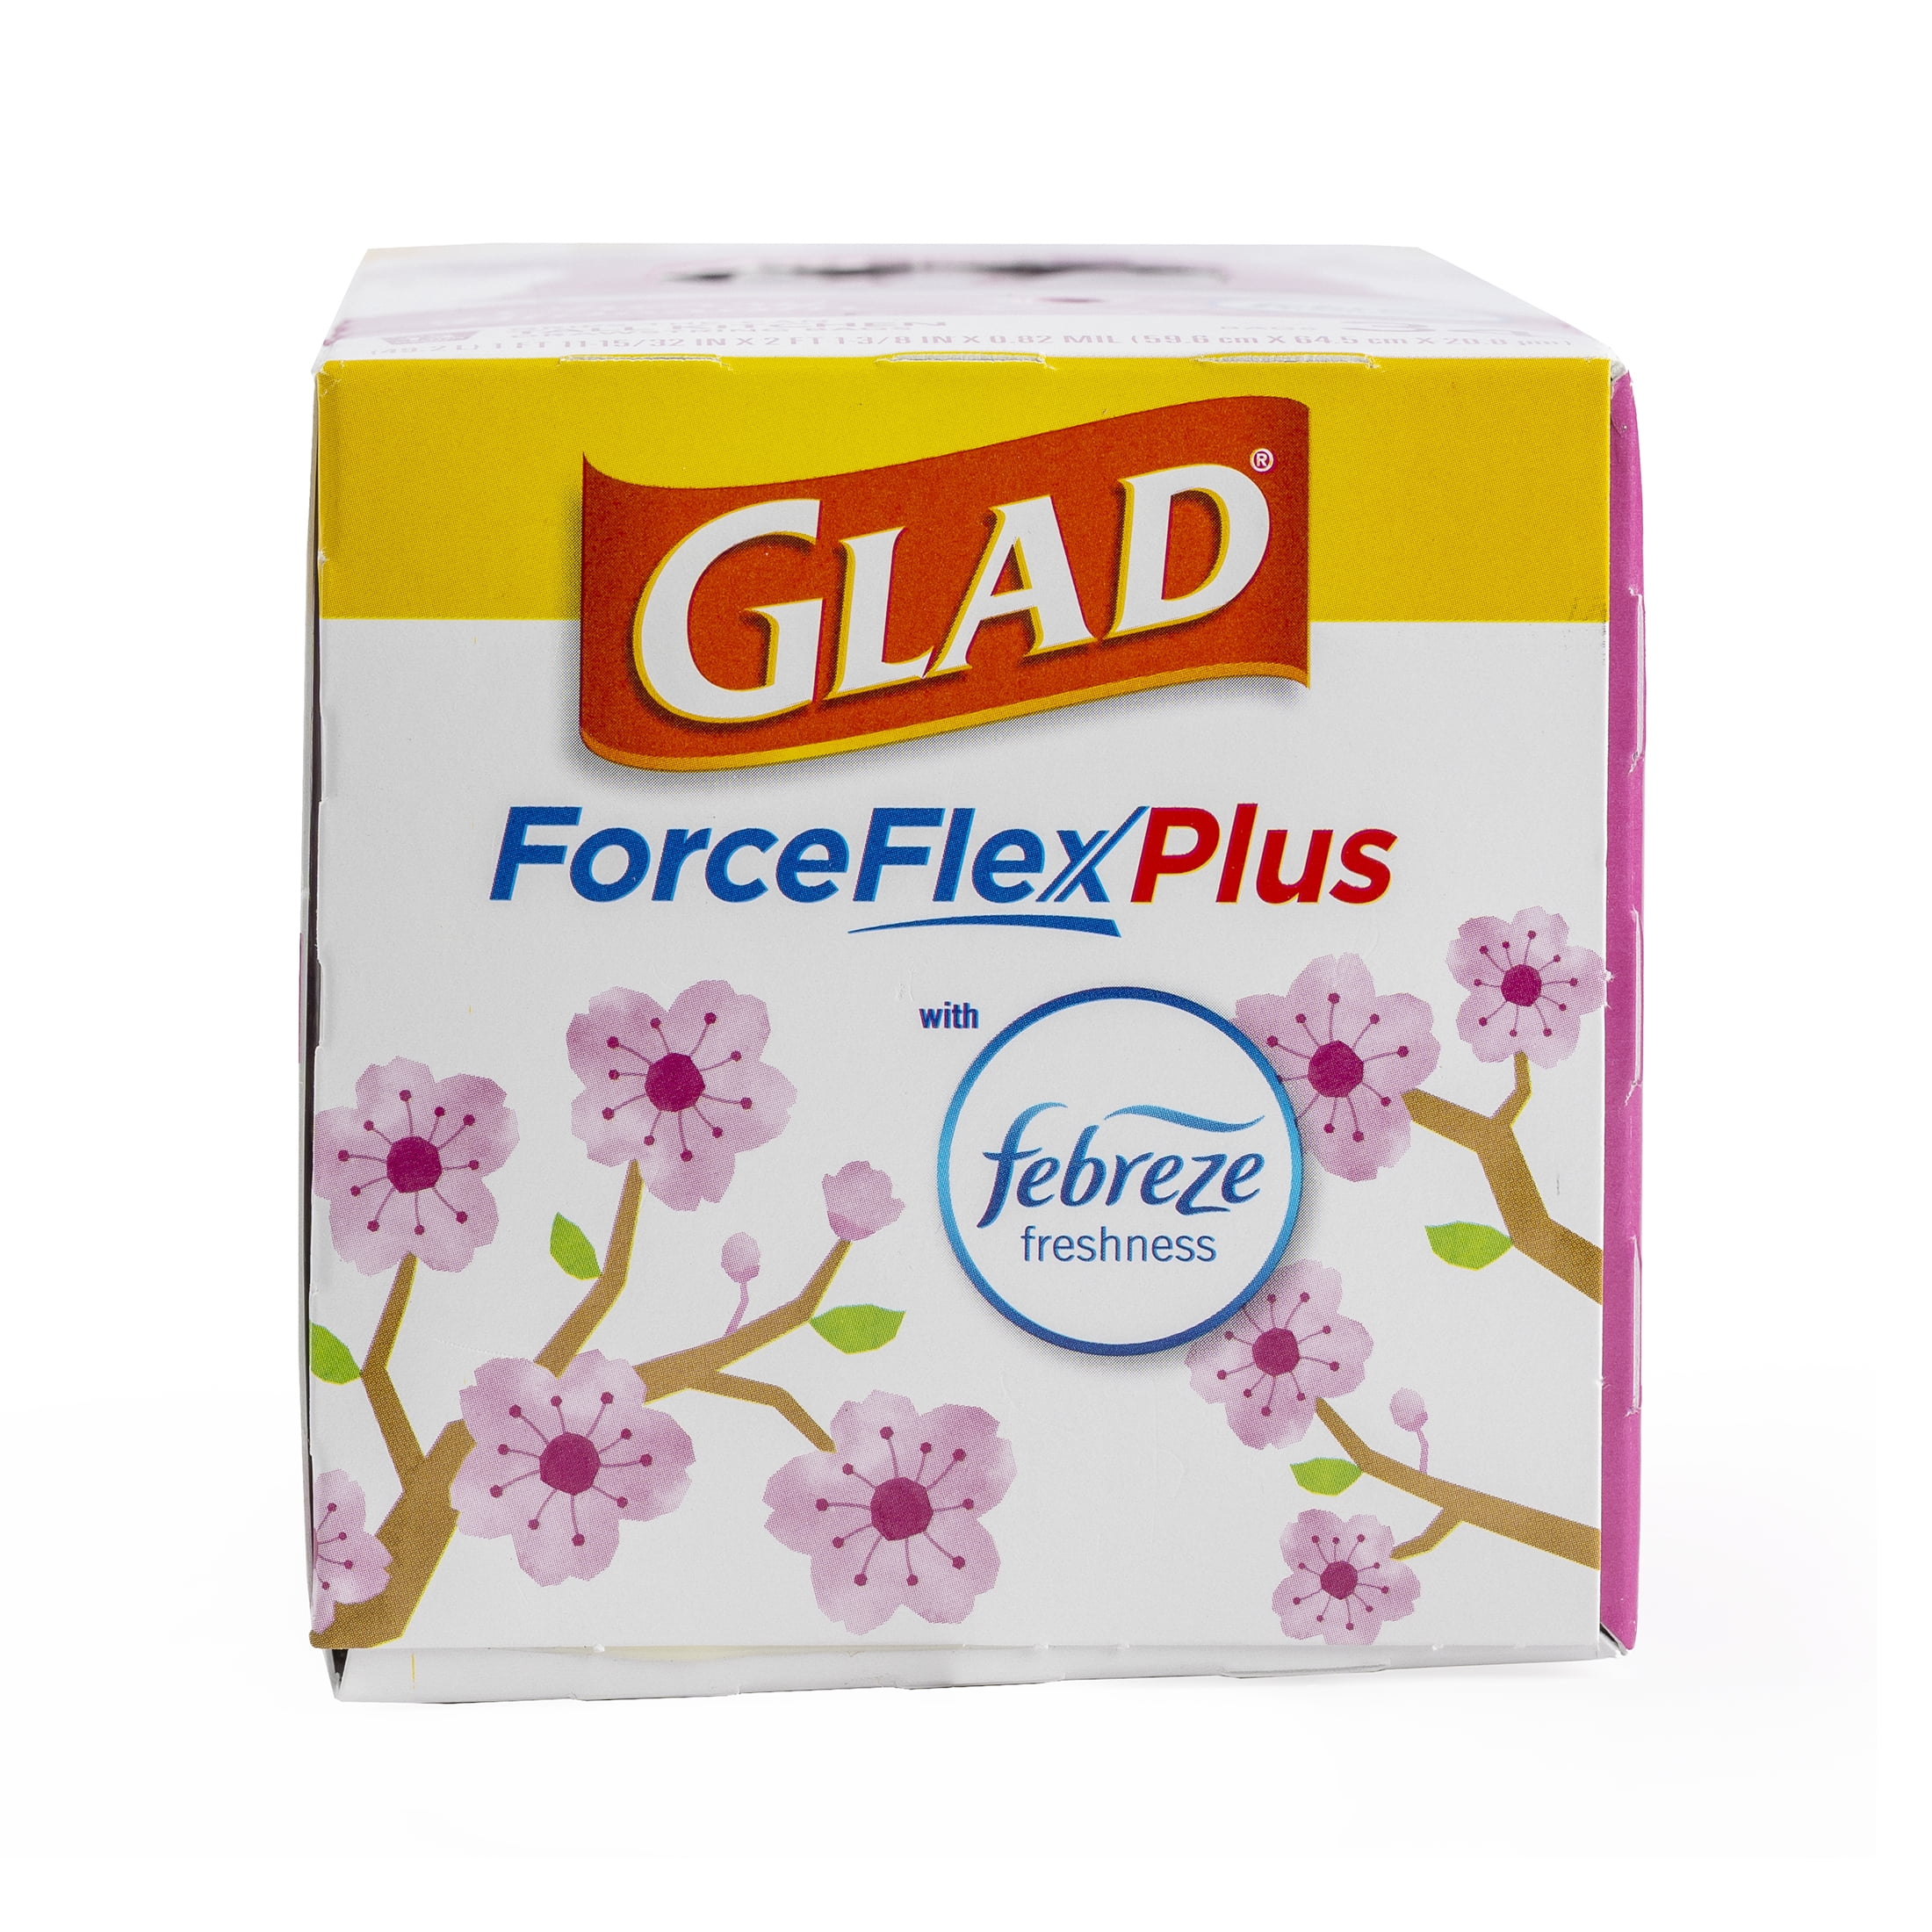 Glad ForceFlex MaxStrength 13 gal. Cherry Blossom Scent Pink